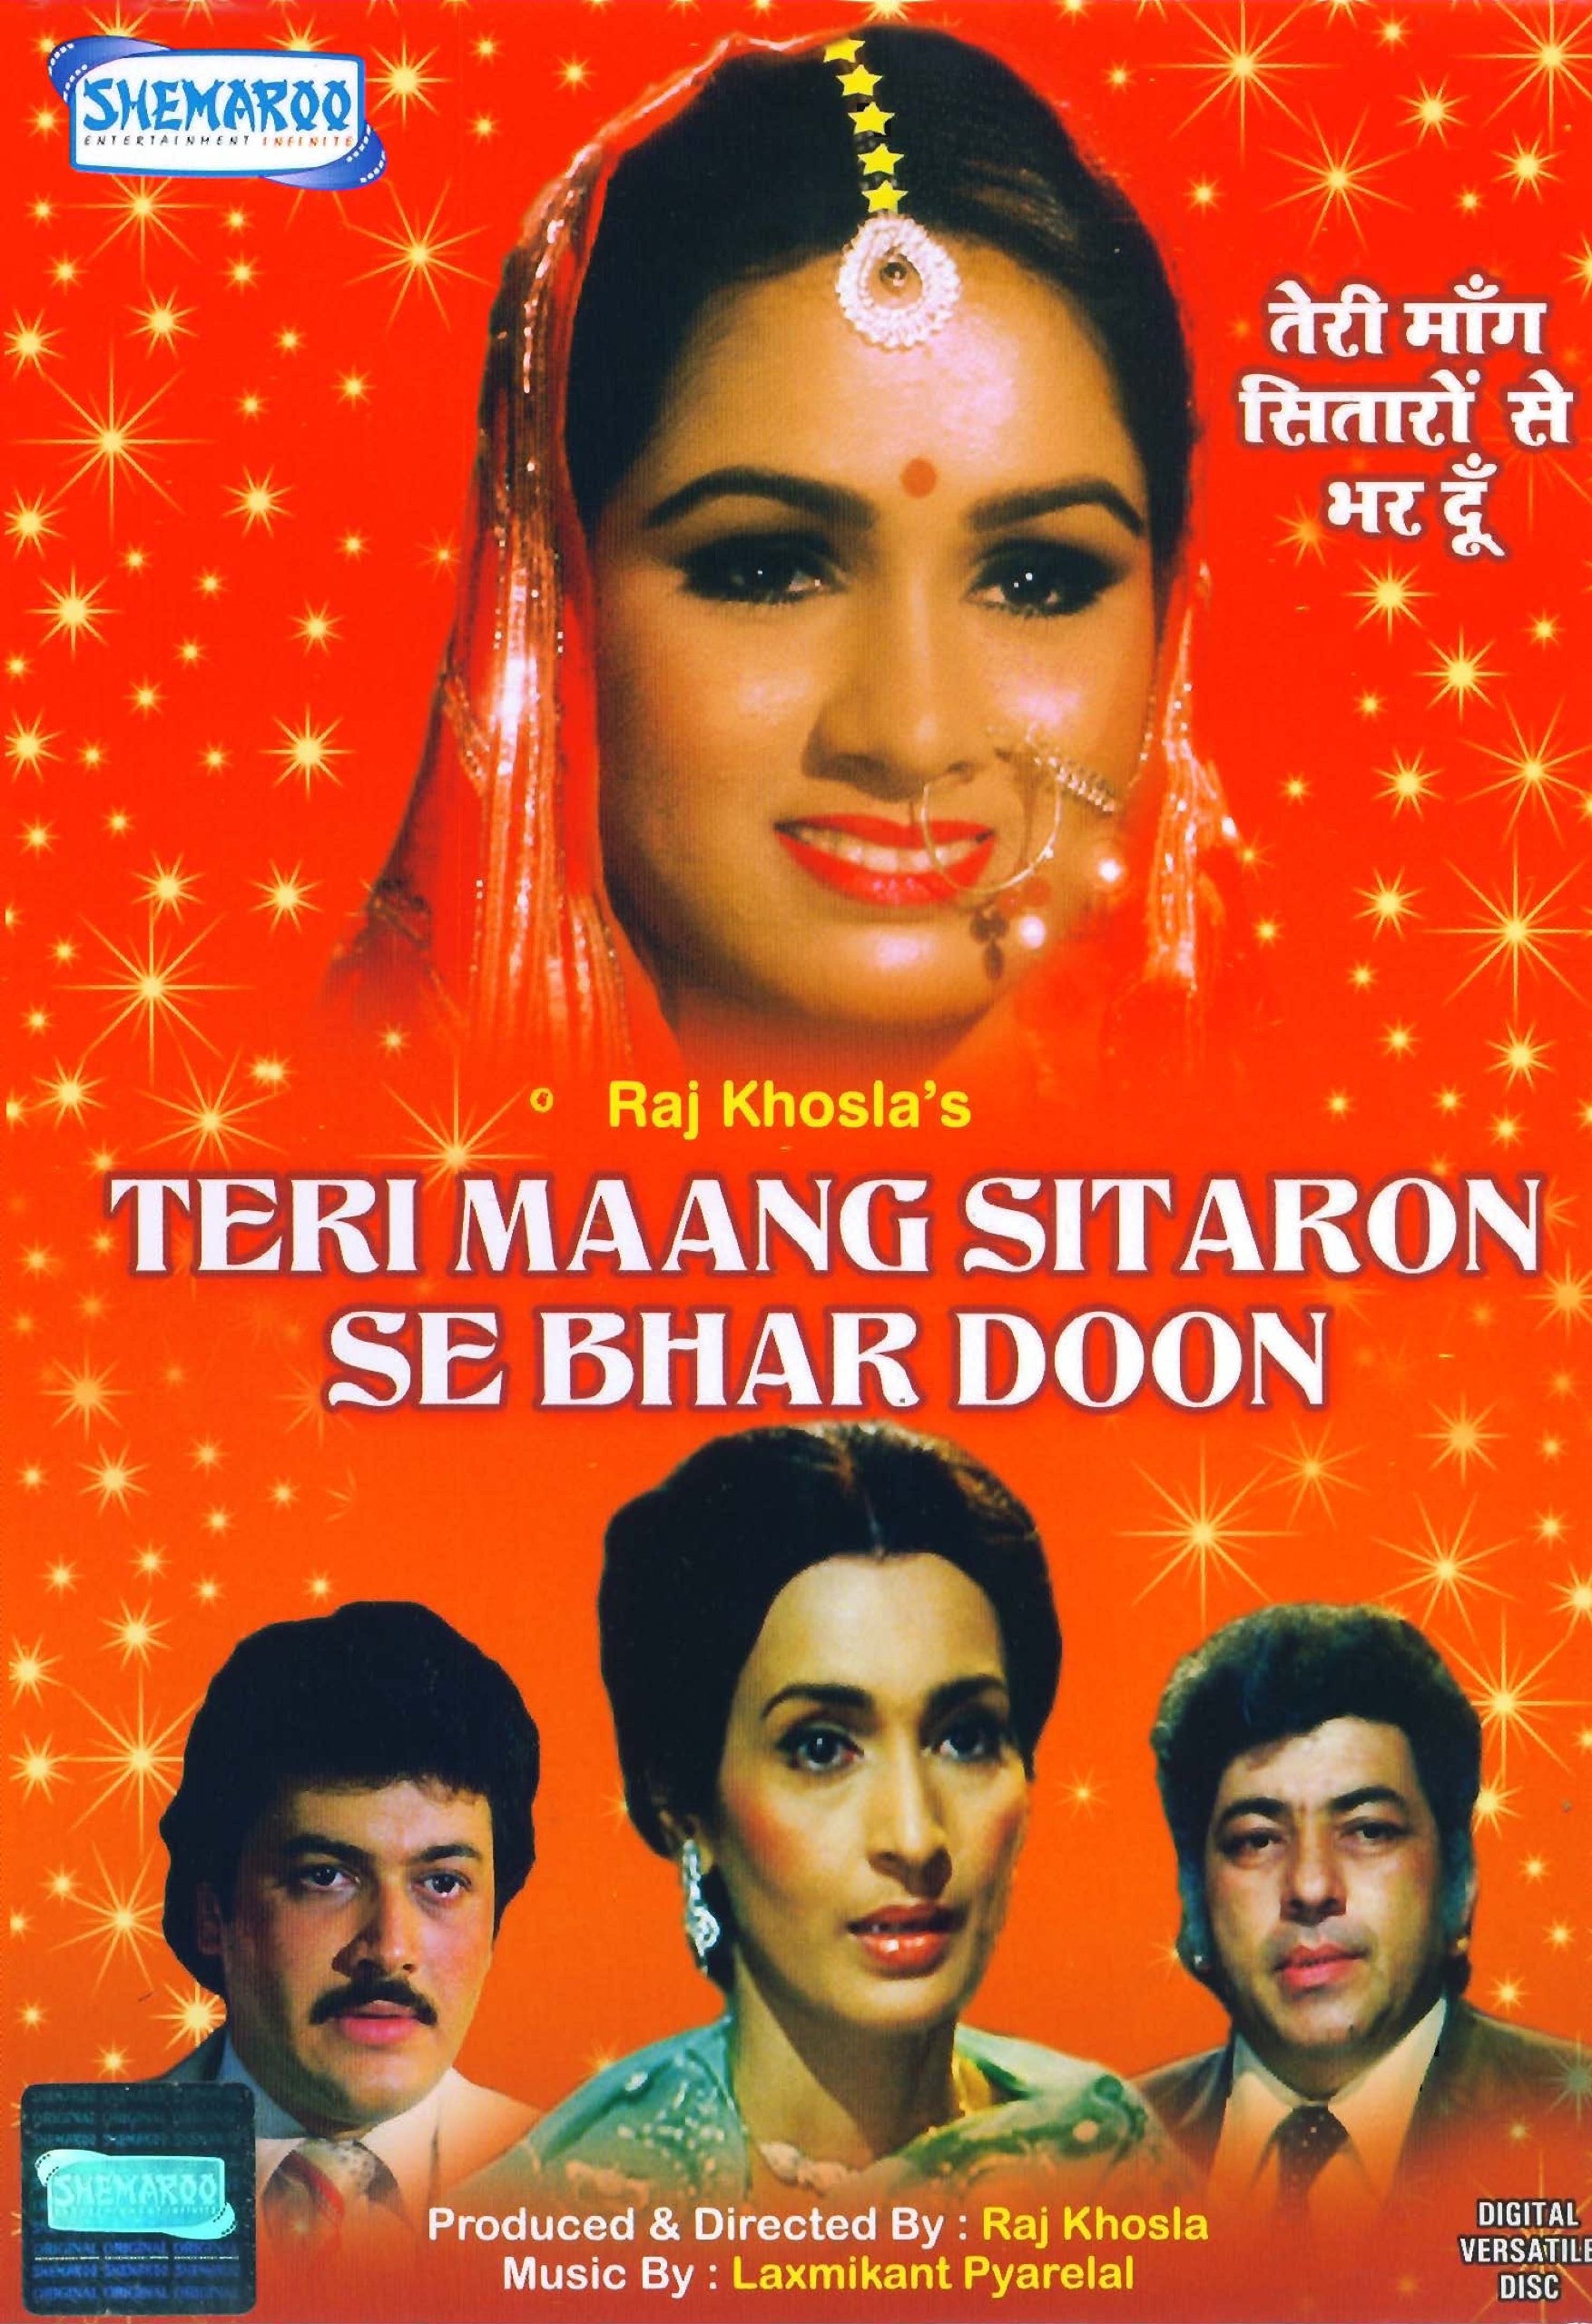 teri-maang-sitaroon-se-bhar-doon-movie-purchase-or-watch-online